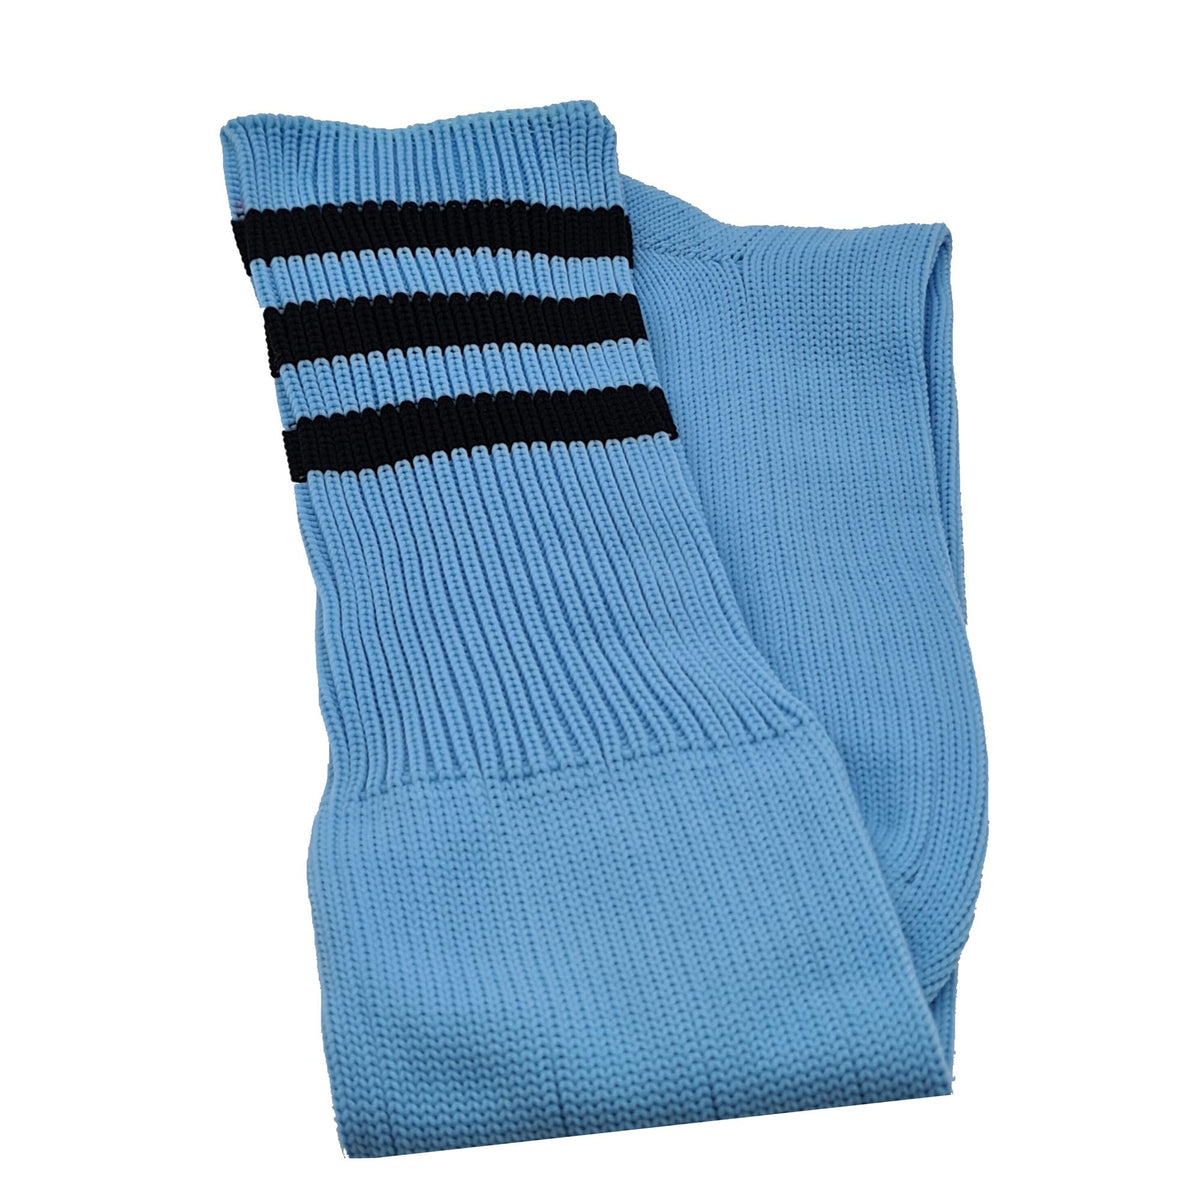 Three Stripes Football Rugby Premium Socks - Made In UK - SKY/BLACK - MENS ( UK 9-12)